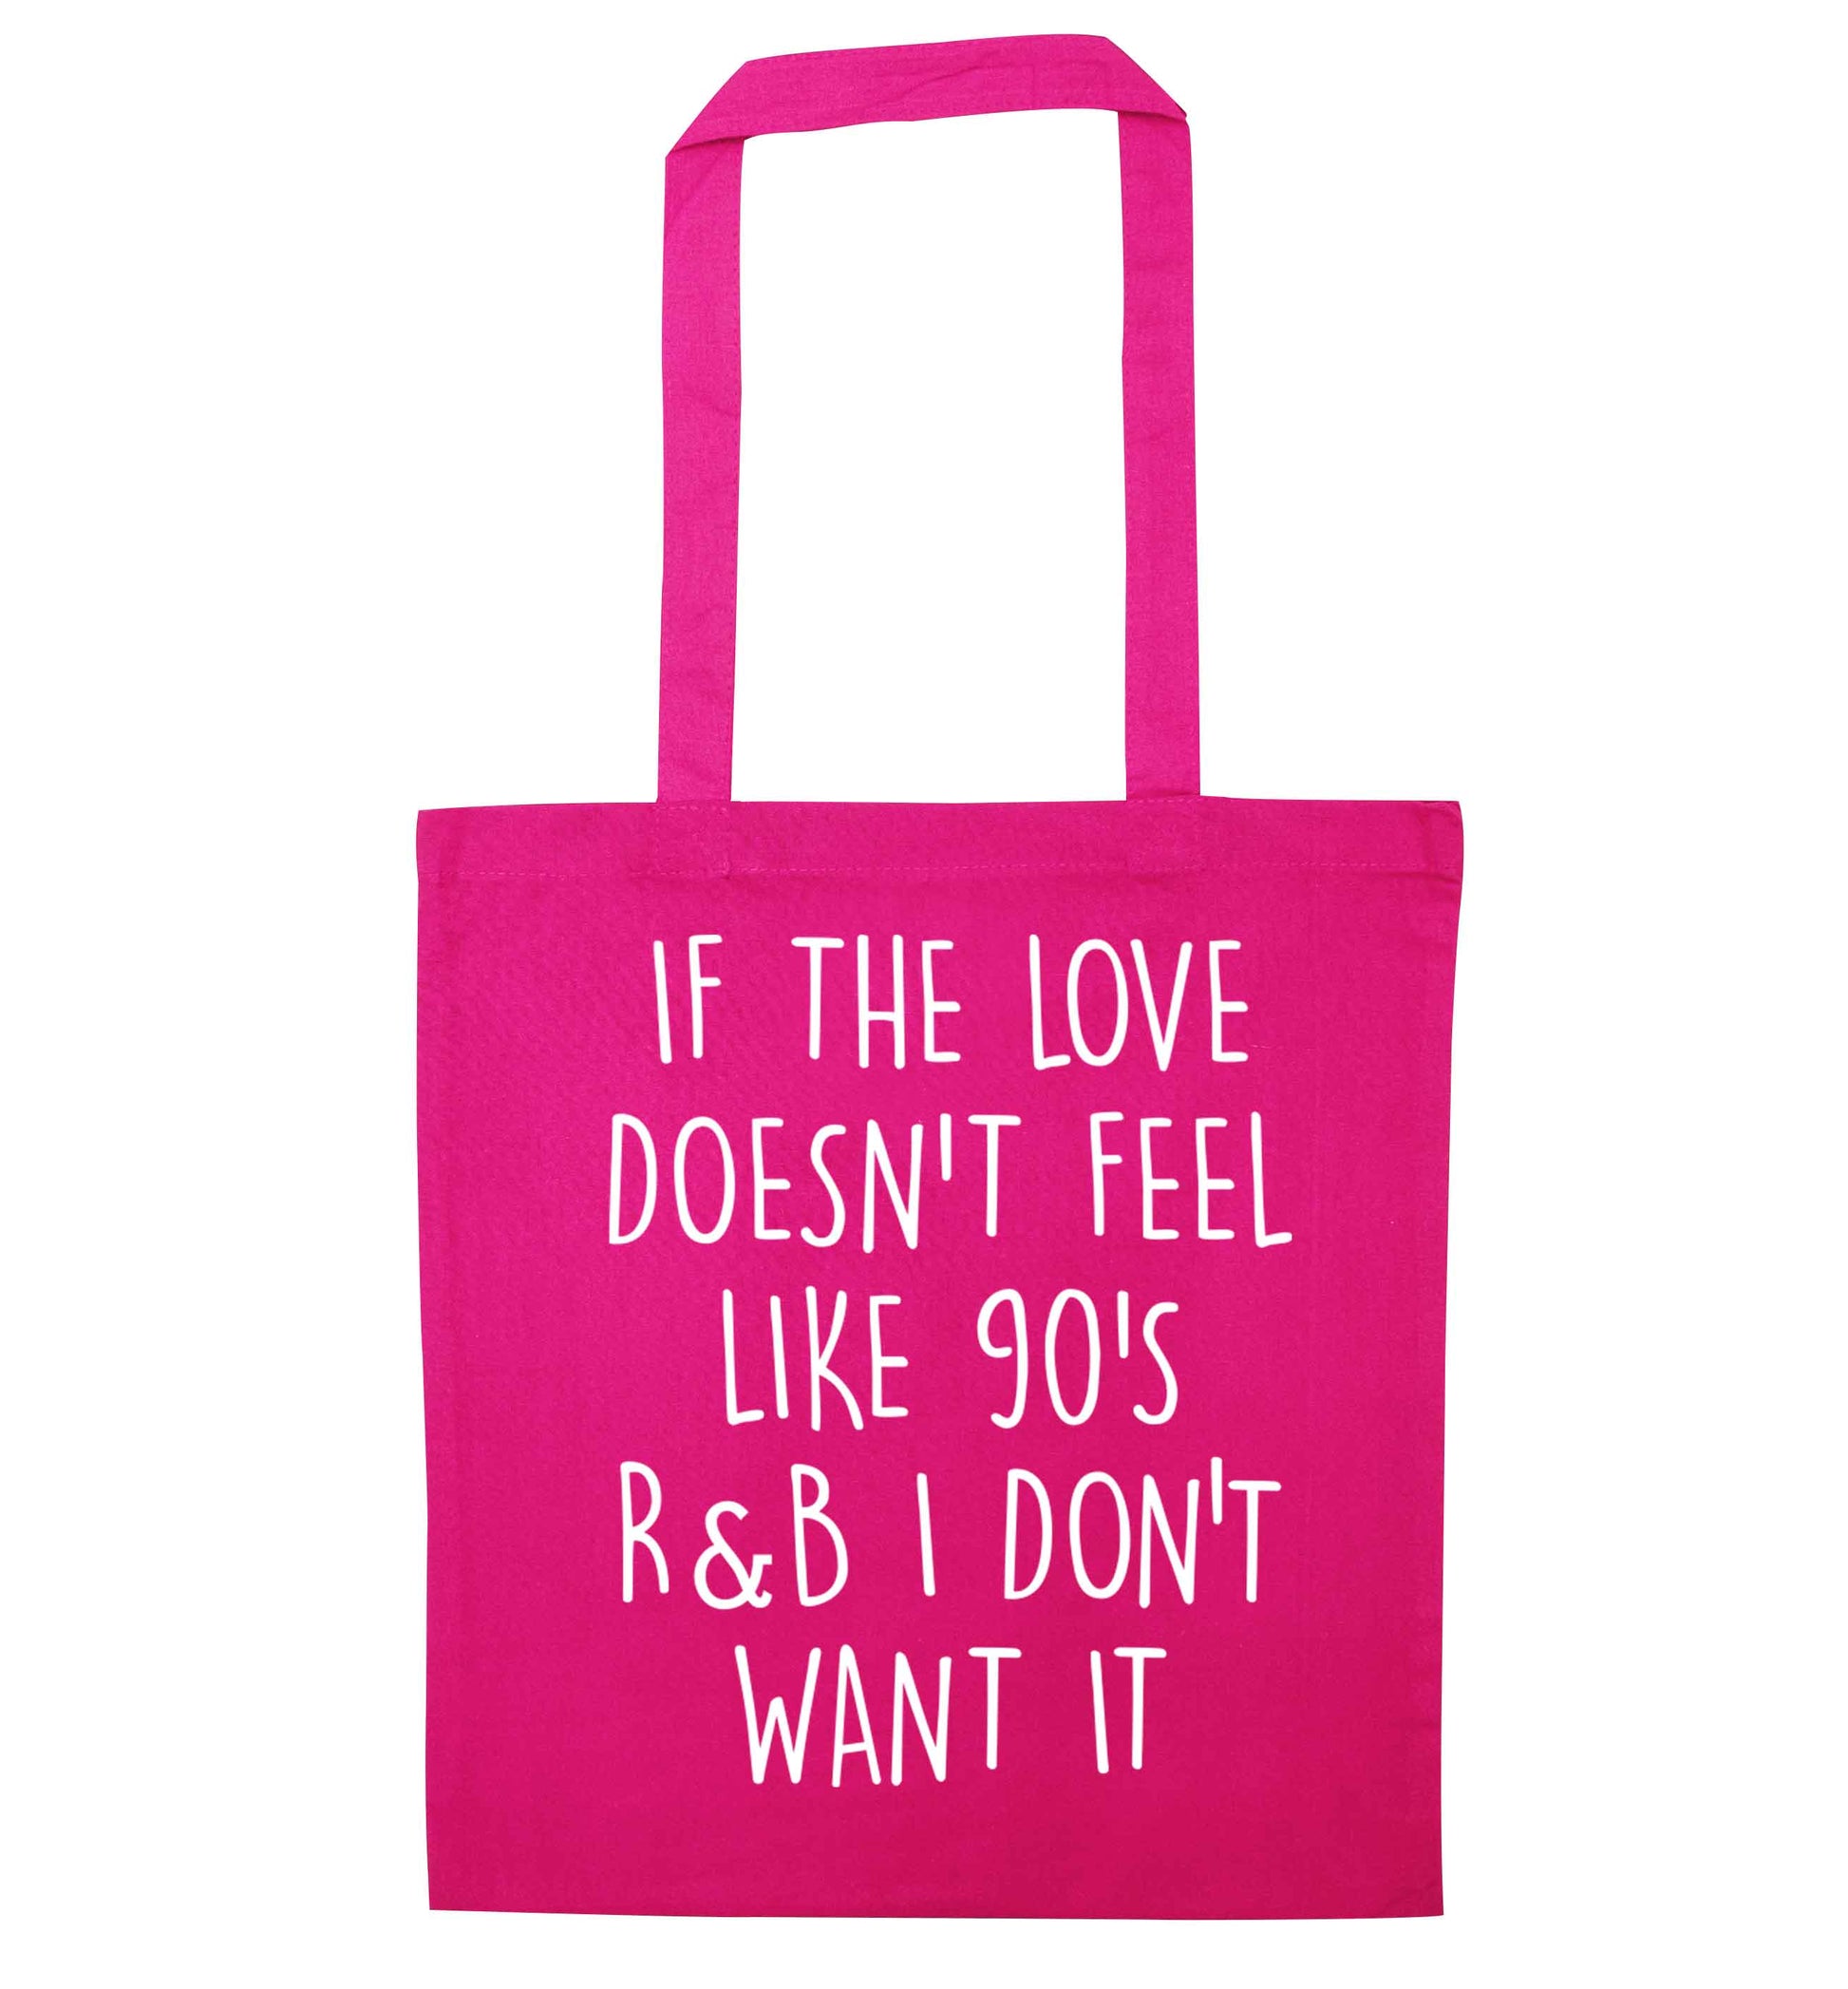 If the love doesn't feel like 90's r&b I don't want it pink tote bag